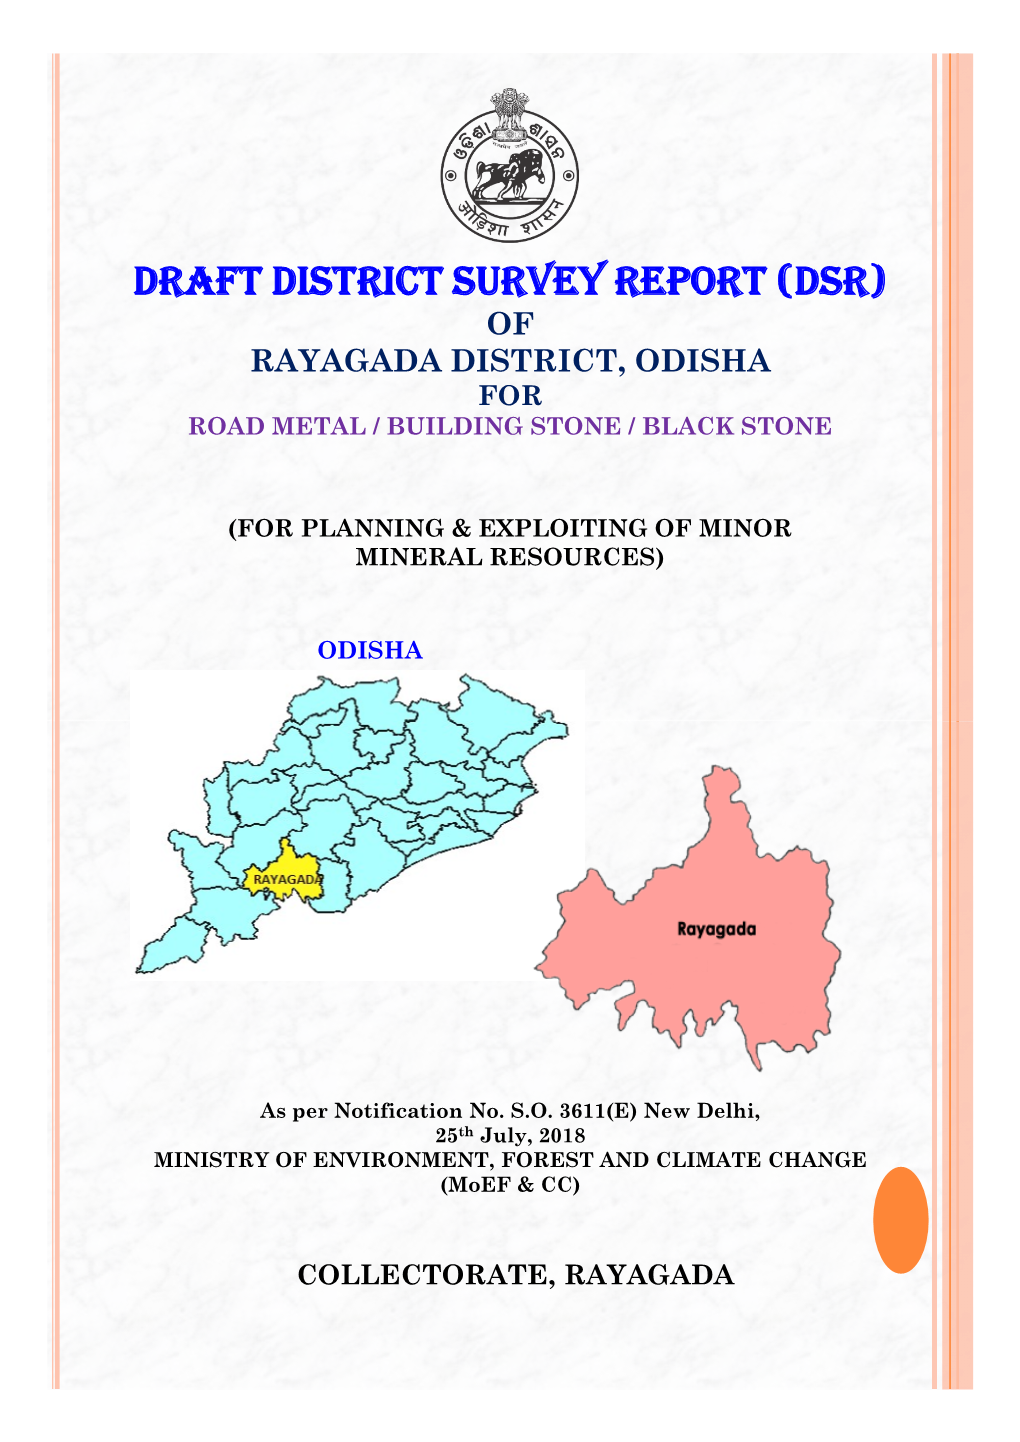 Draft District Survey Report (Dsr) of Rayagada District, Odisha for Road Metal / Building Stone / Black Stone